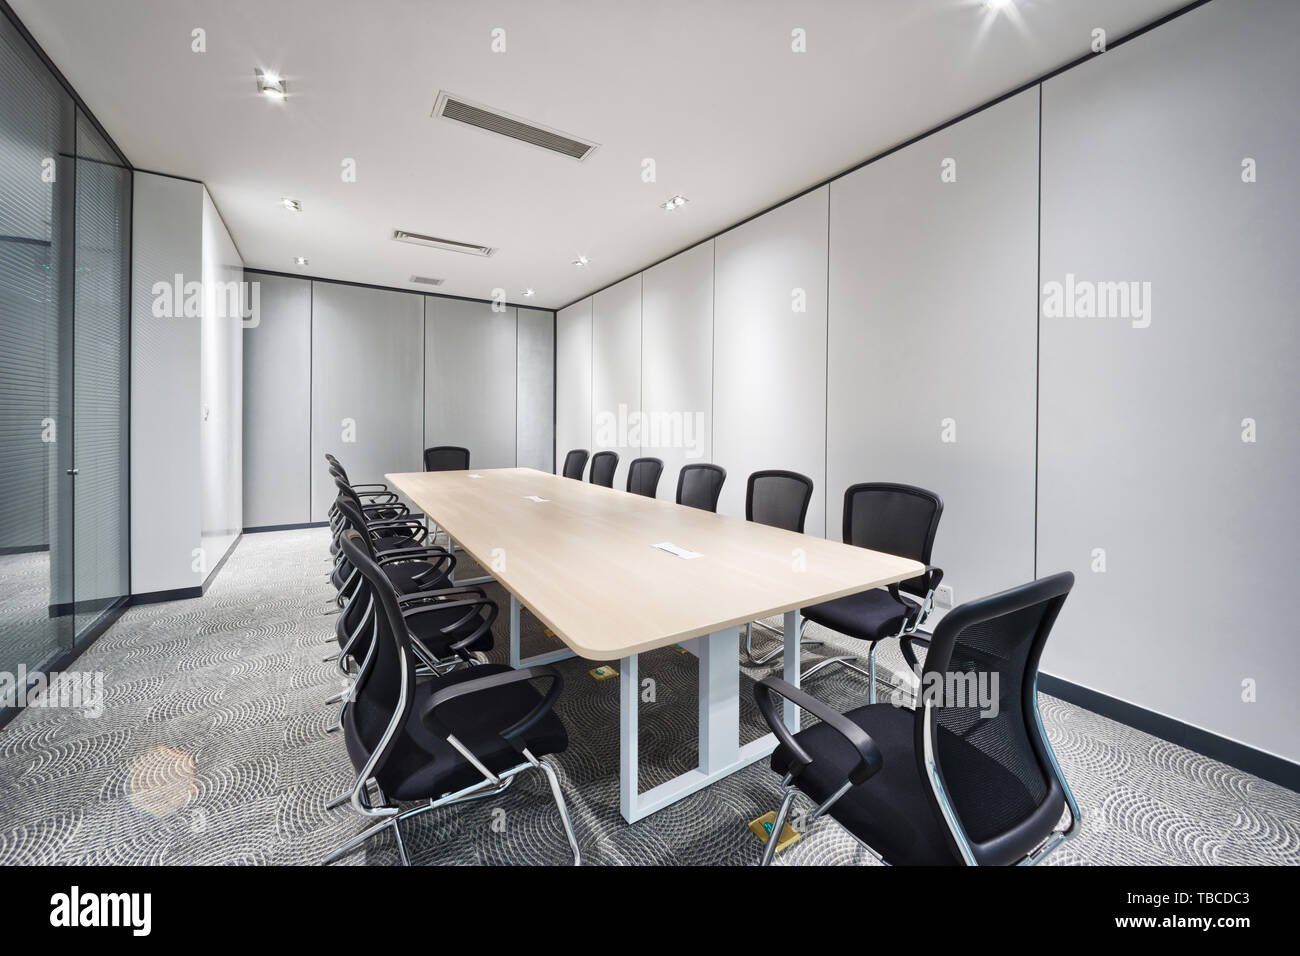 Modern Office Meeting Room Interior Stock Photo 247980323 Alamy